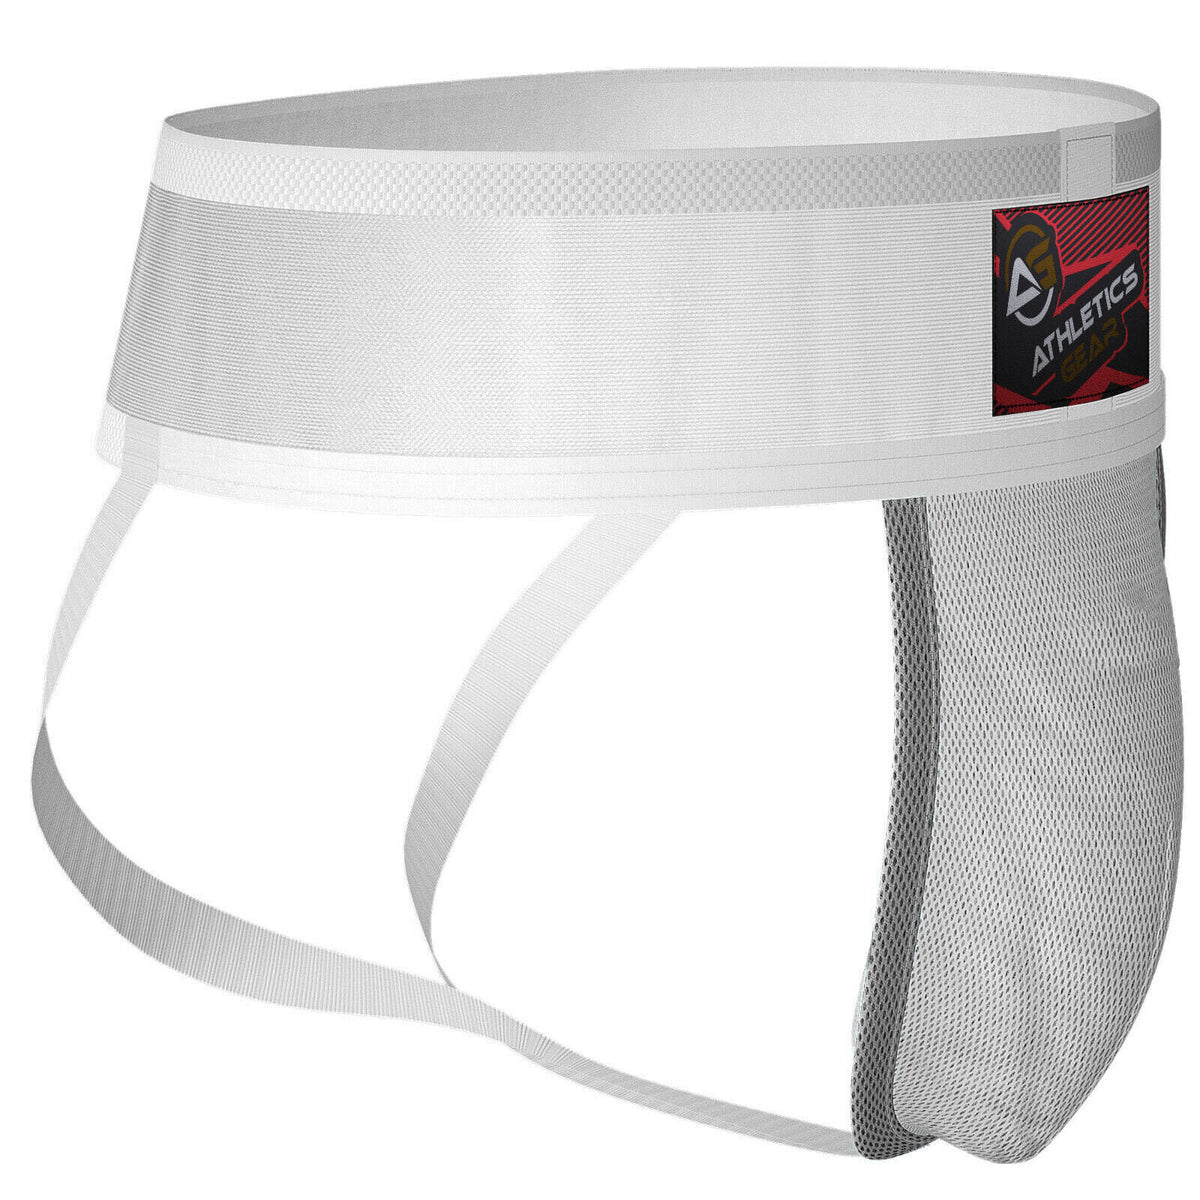 Carbon Flex Groin Protector Cup - Sports Groin Guard With Cup Boxing MMA Protector Box Martial Arts Abdo Jockstrap